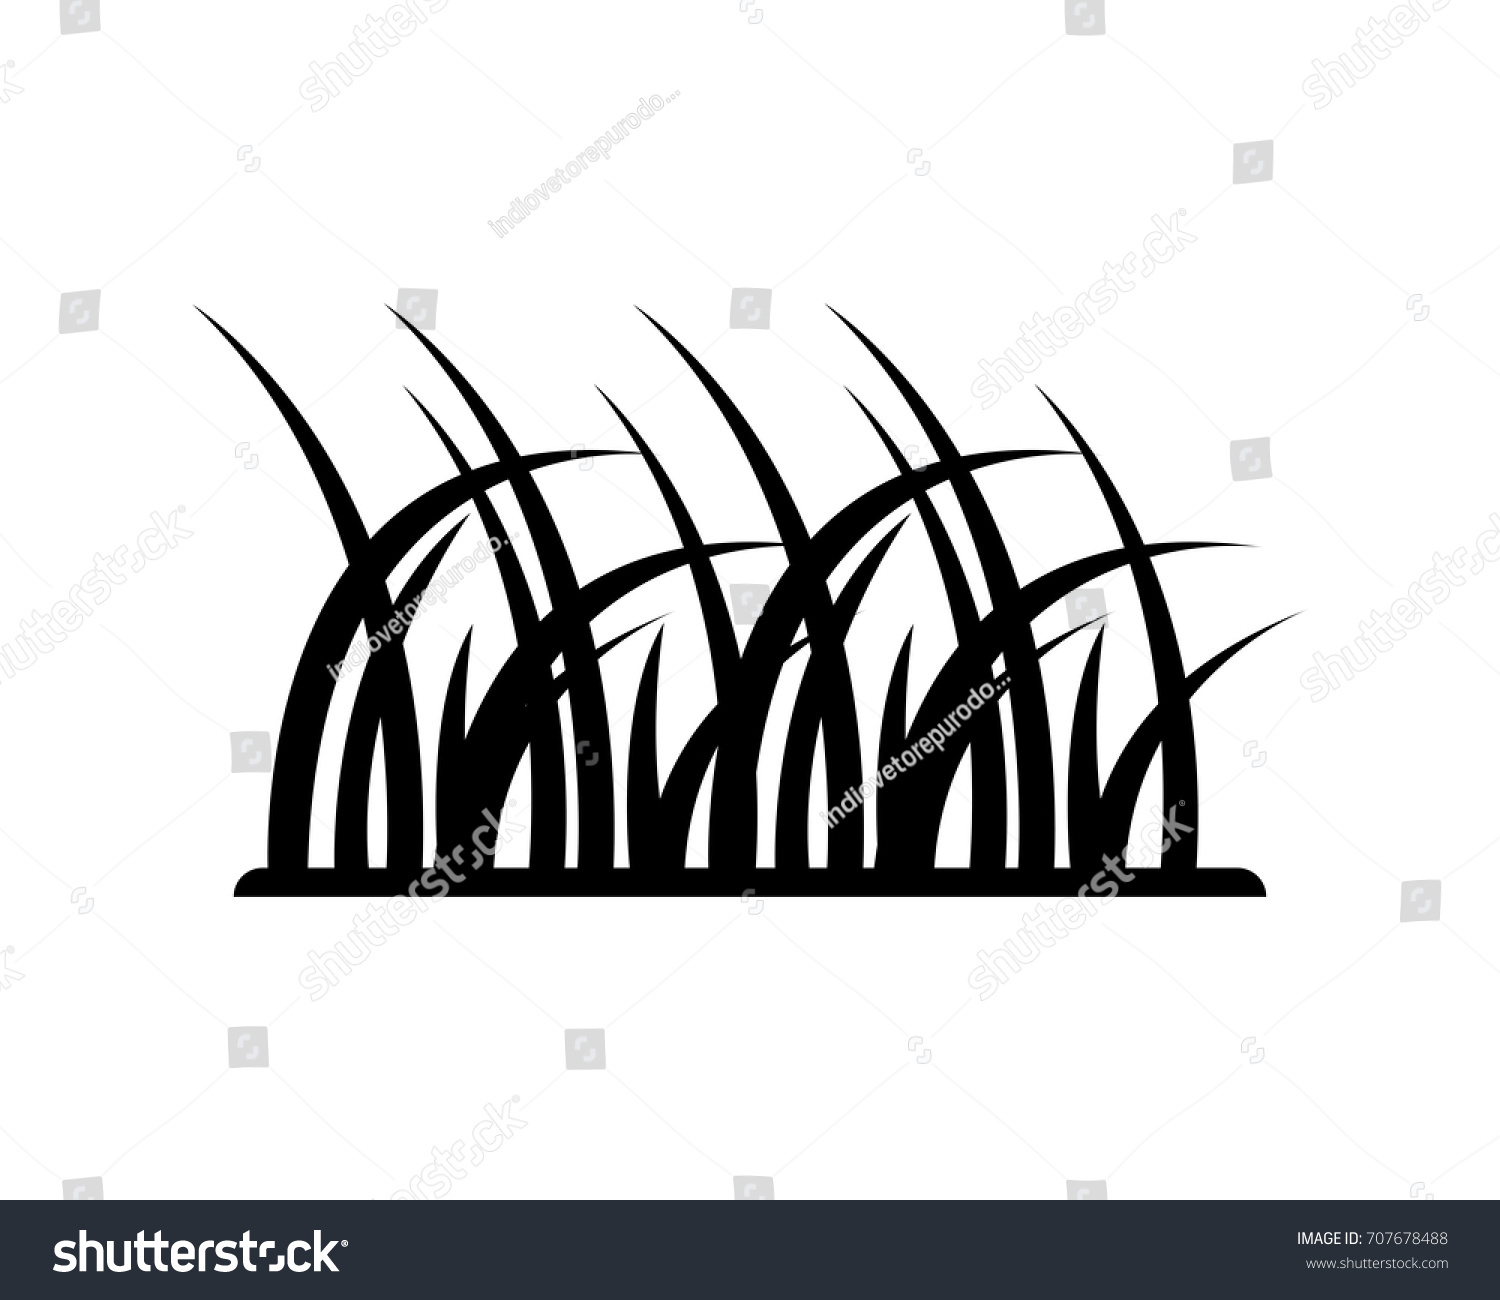 Black Grass Silhouette Stock Vector 707678488 - Shutterstock